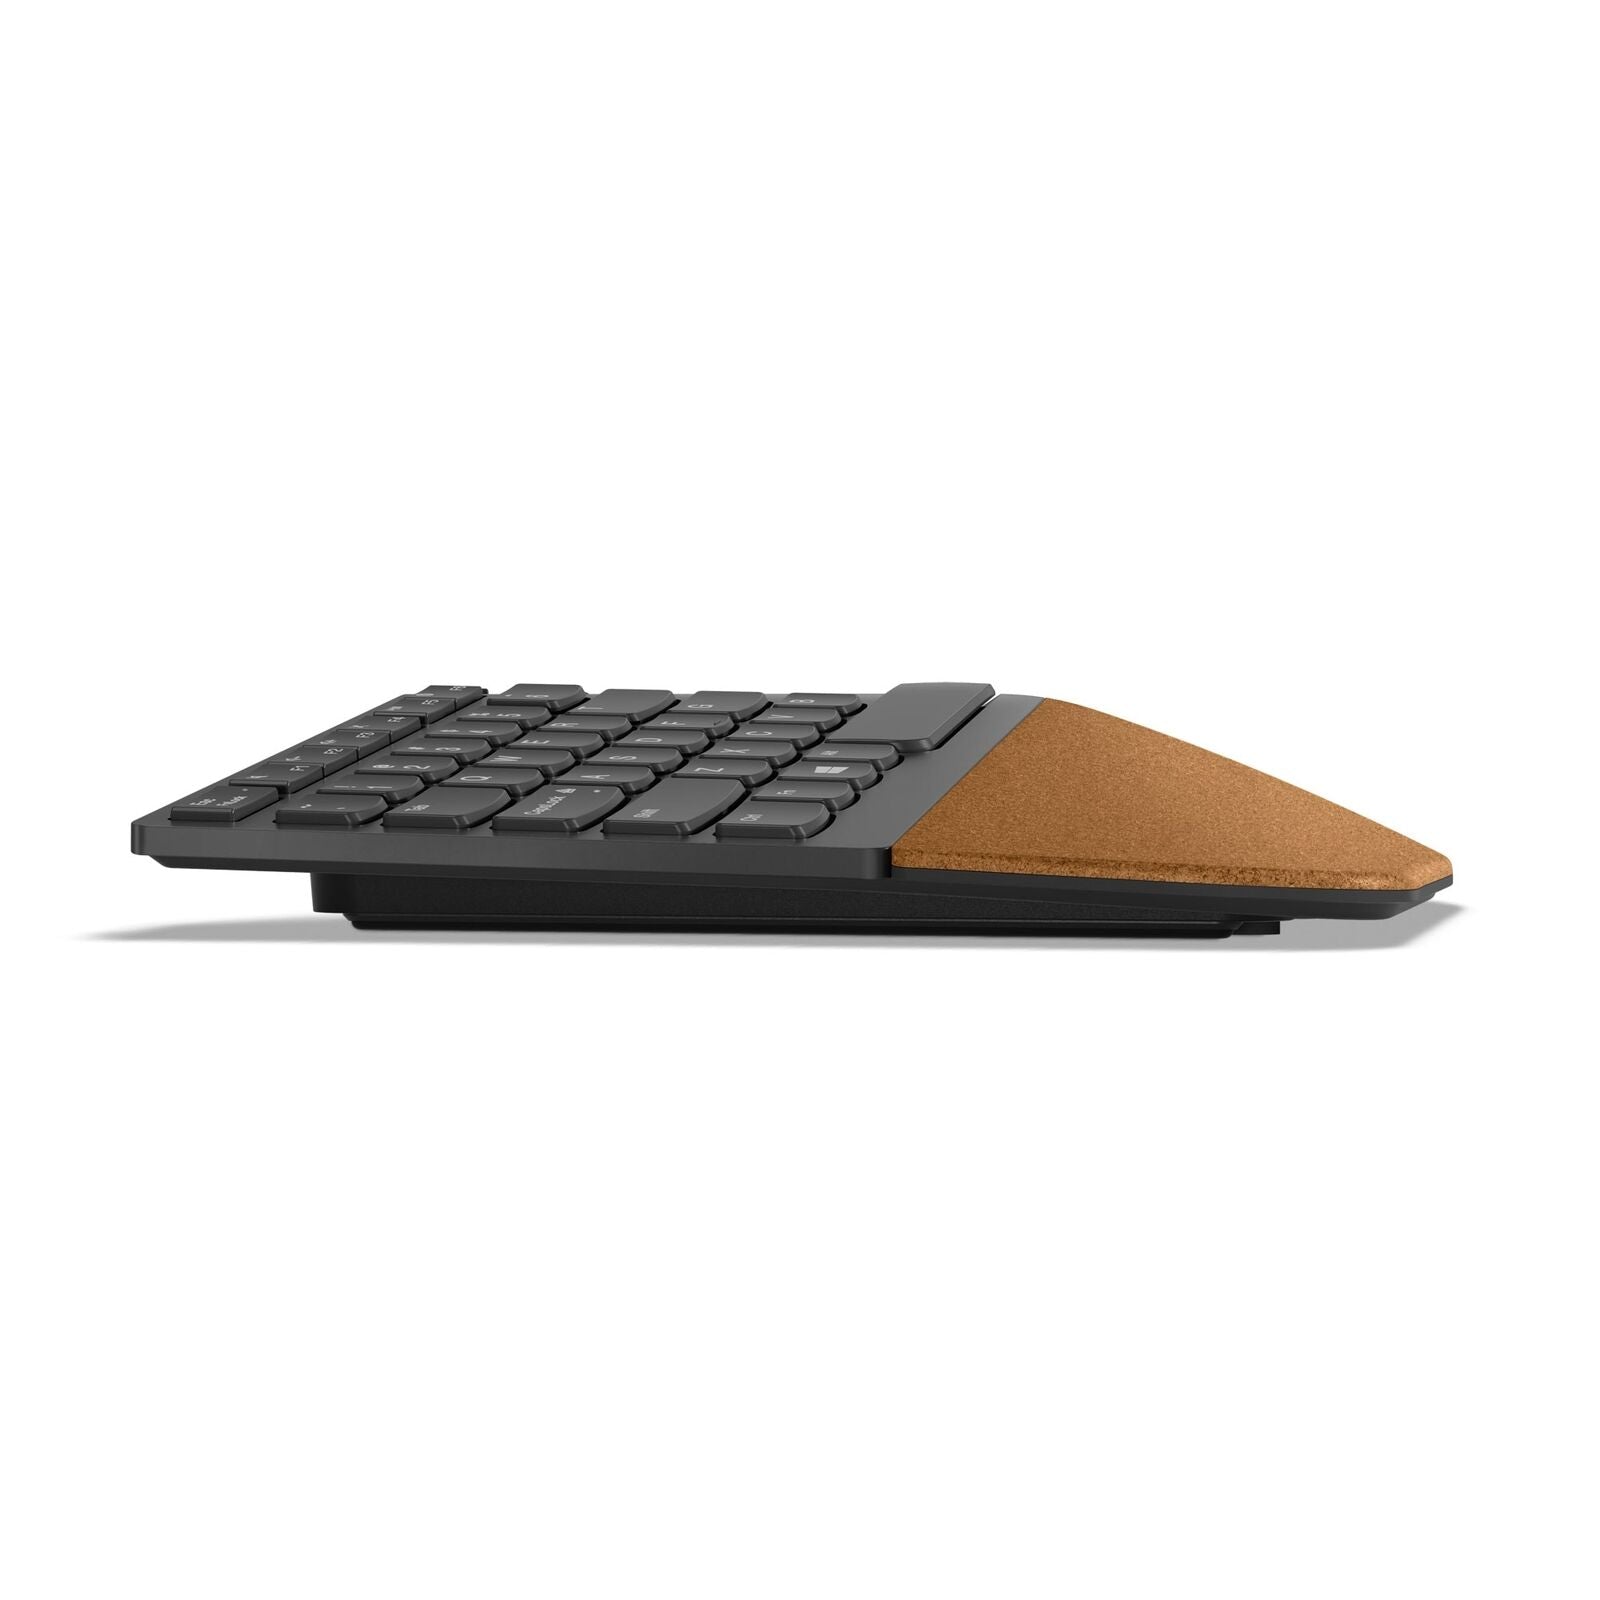 Lenovo Go Split Keyboard Wireless